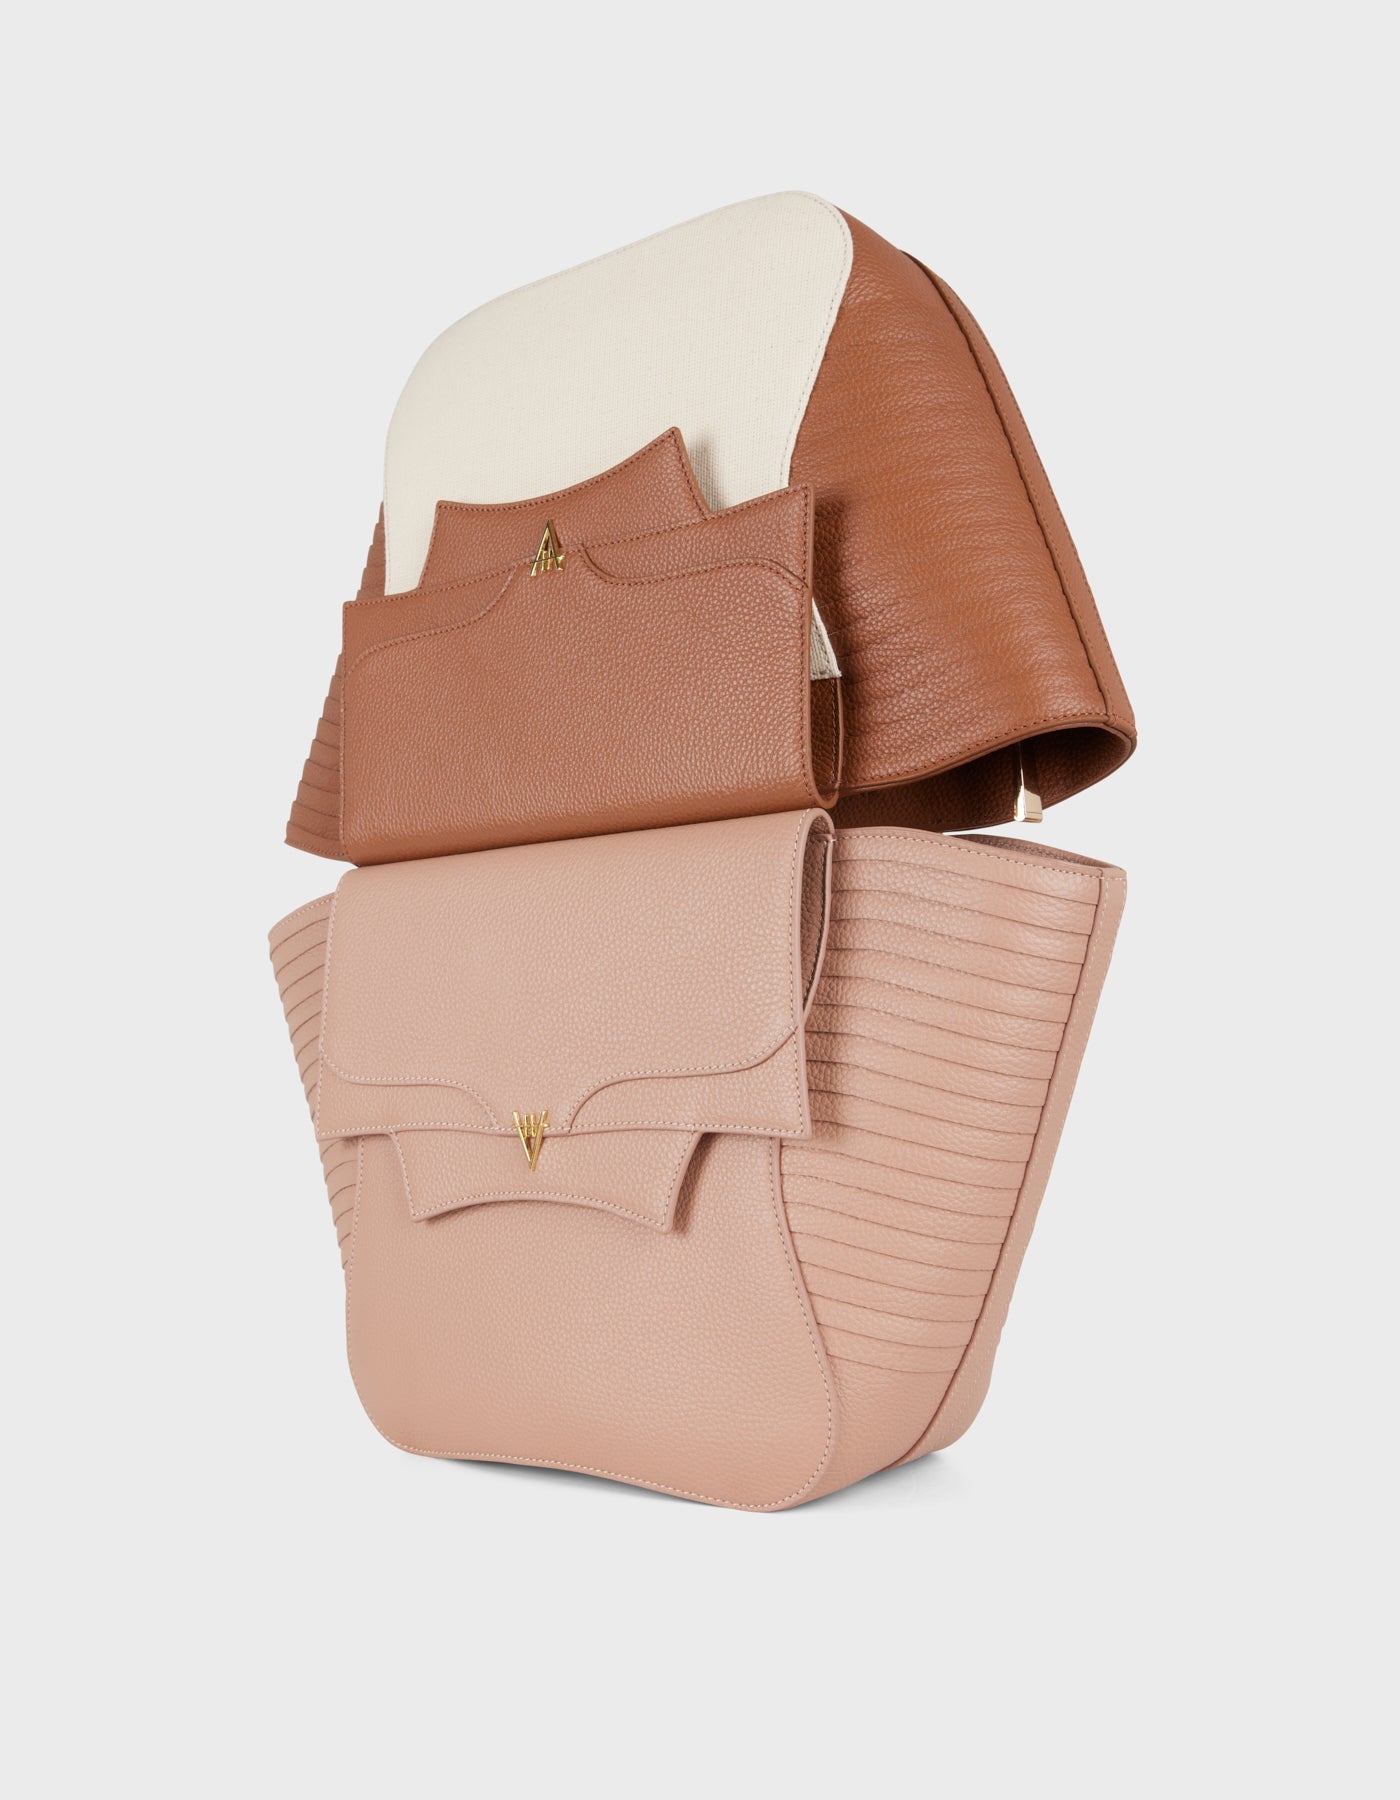 Hiva Atelier | Orbis Tote Bag Peach Sand | Beautiful and Versatile